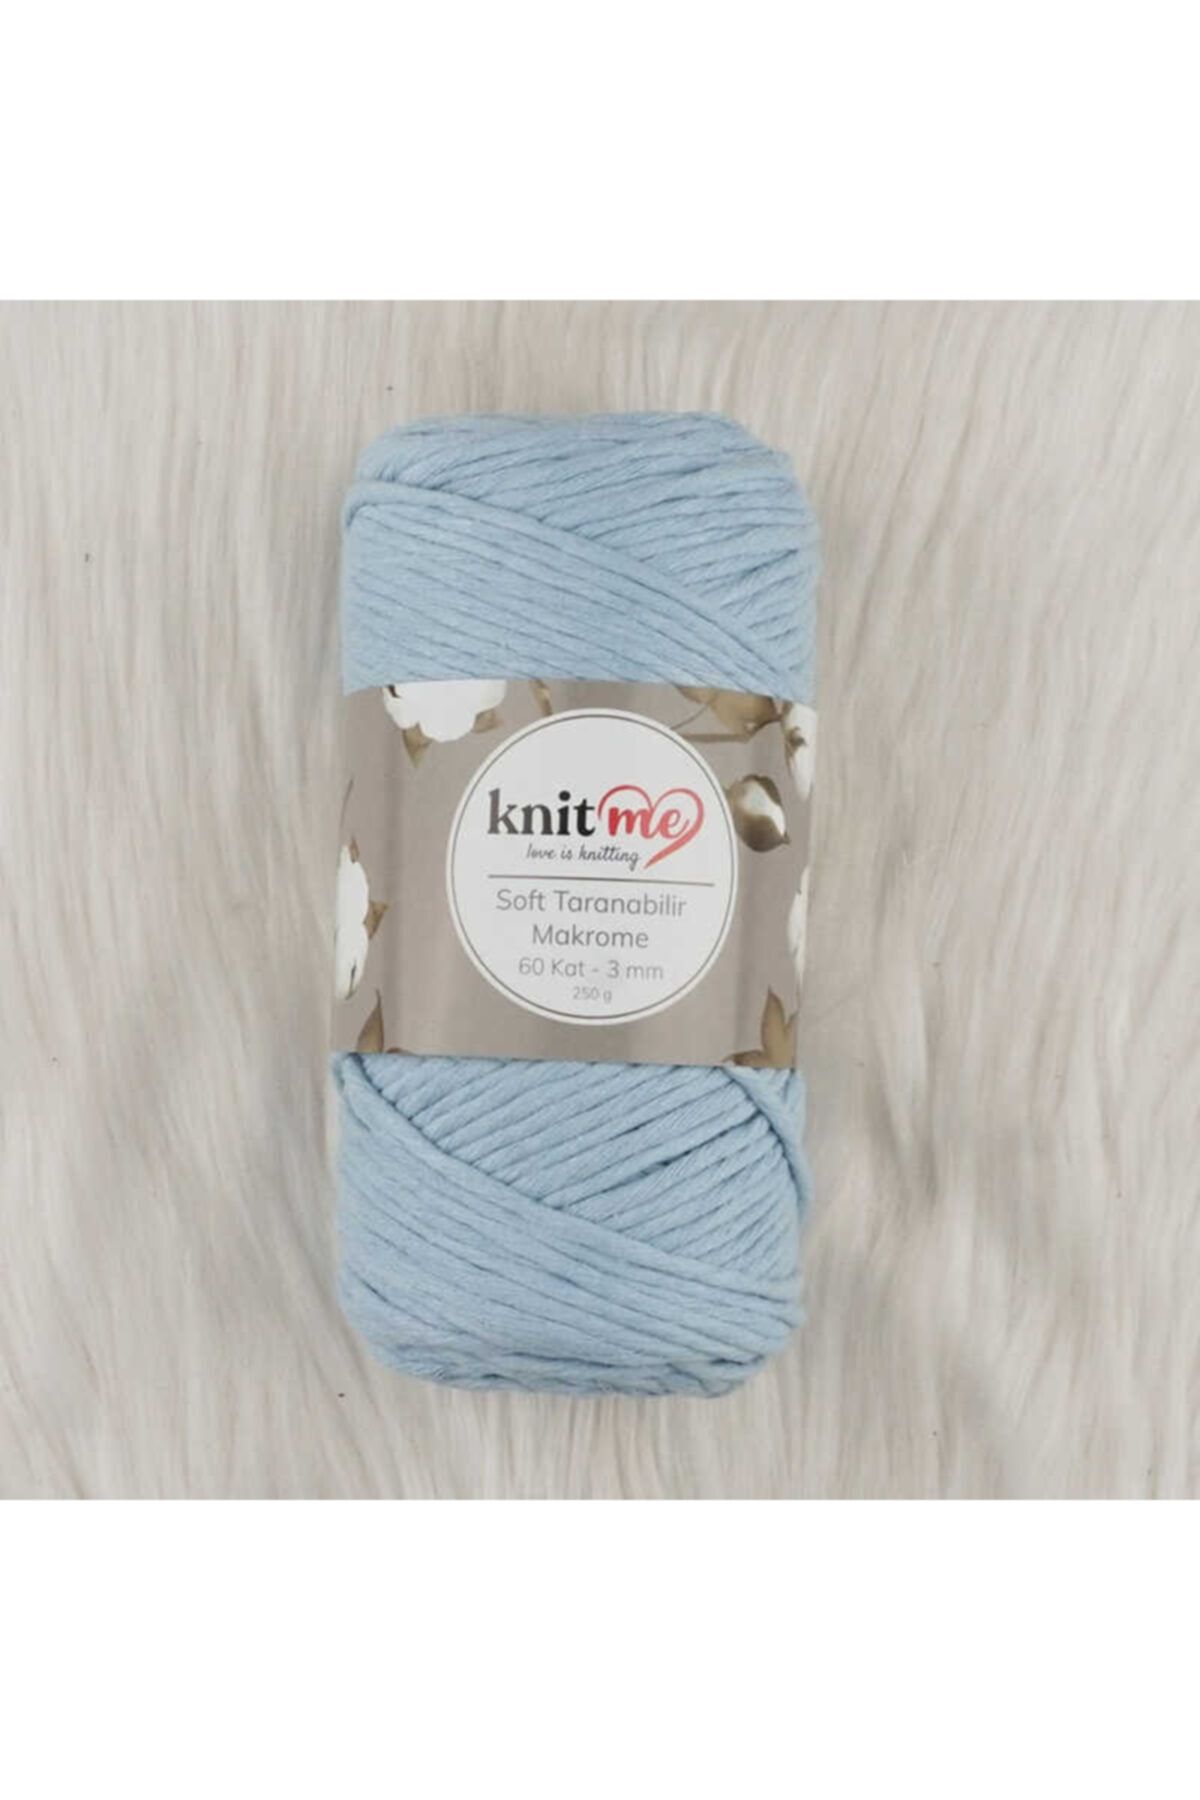 knitme Knit Me Soft Taranabilir Makrome Ipi 60 Kat 3 Mm.250 Gr. 10201